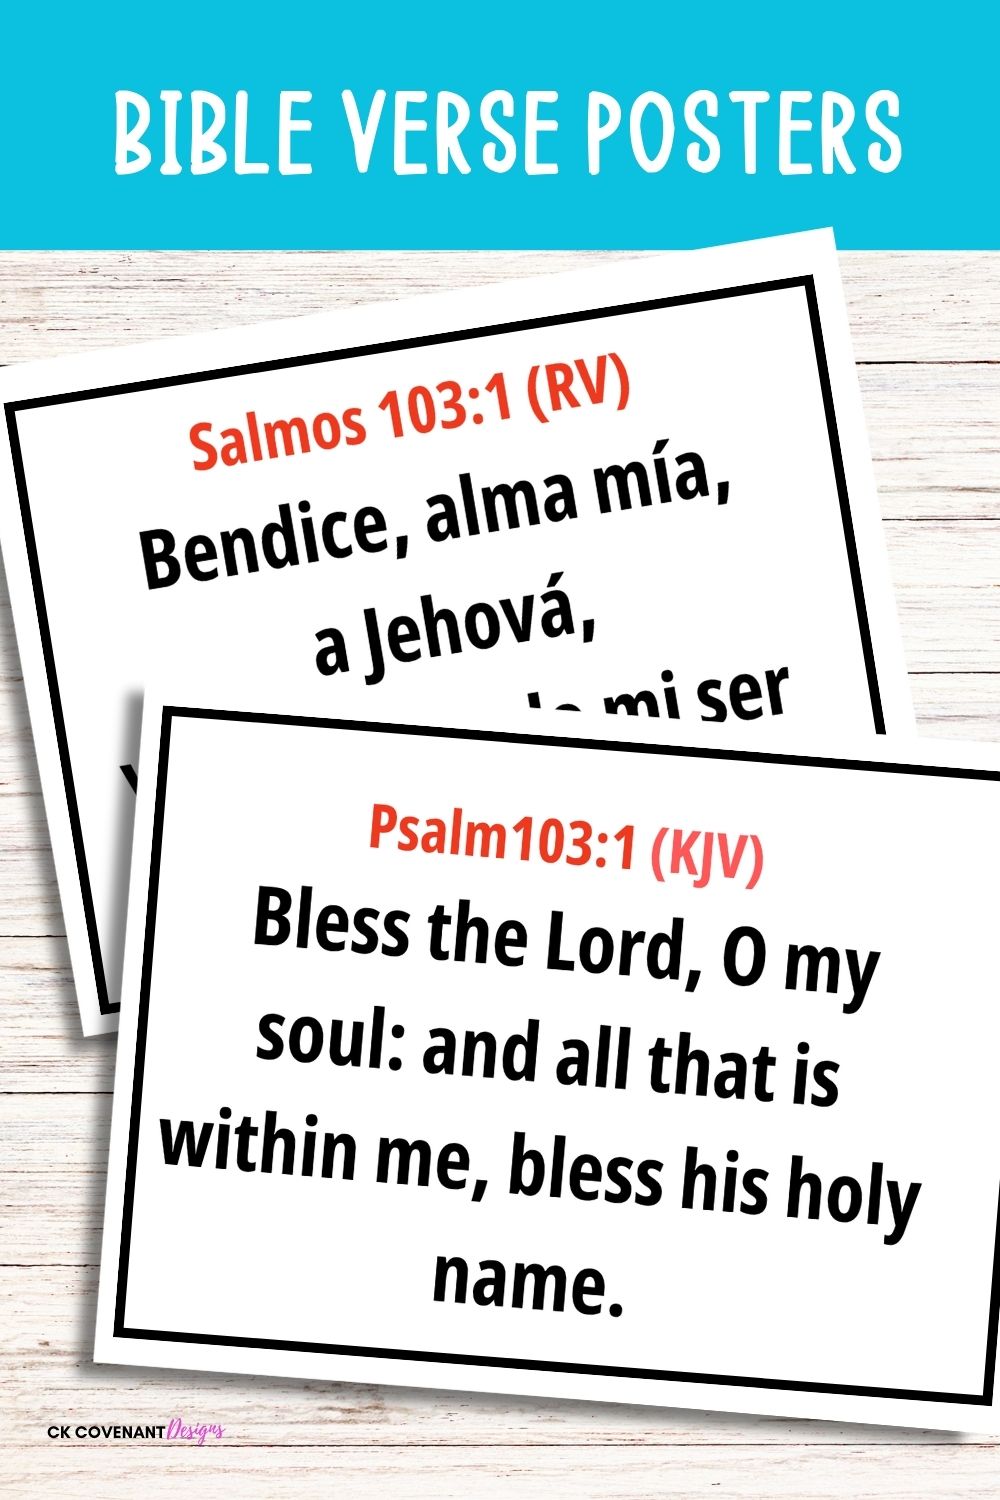 Spanish Bible Memory Fun Set -  Psalms 103:1